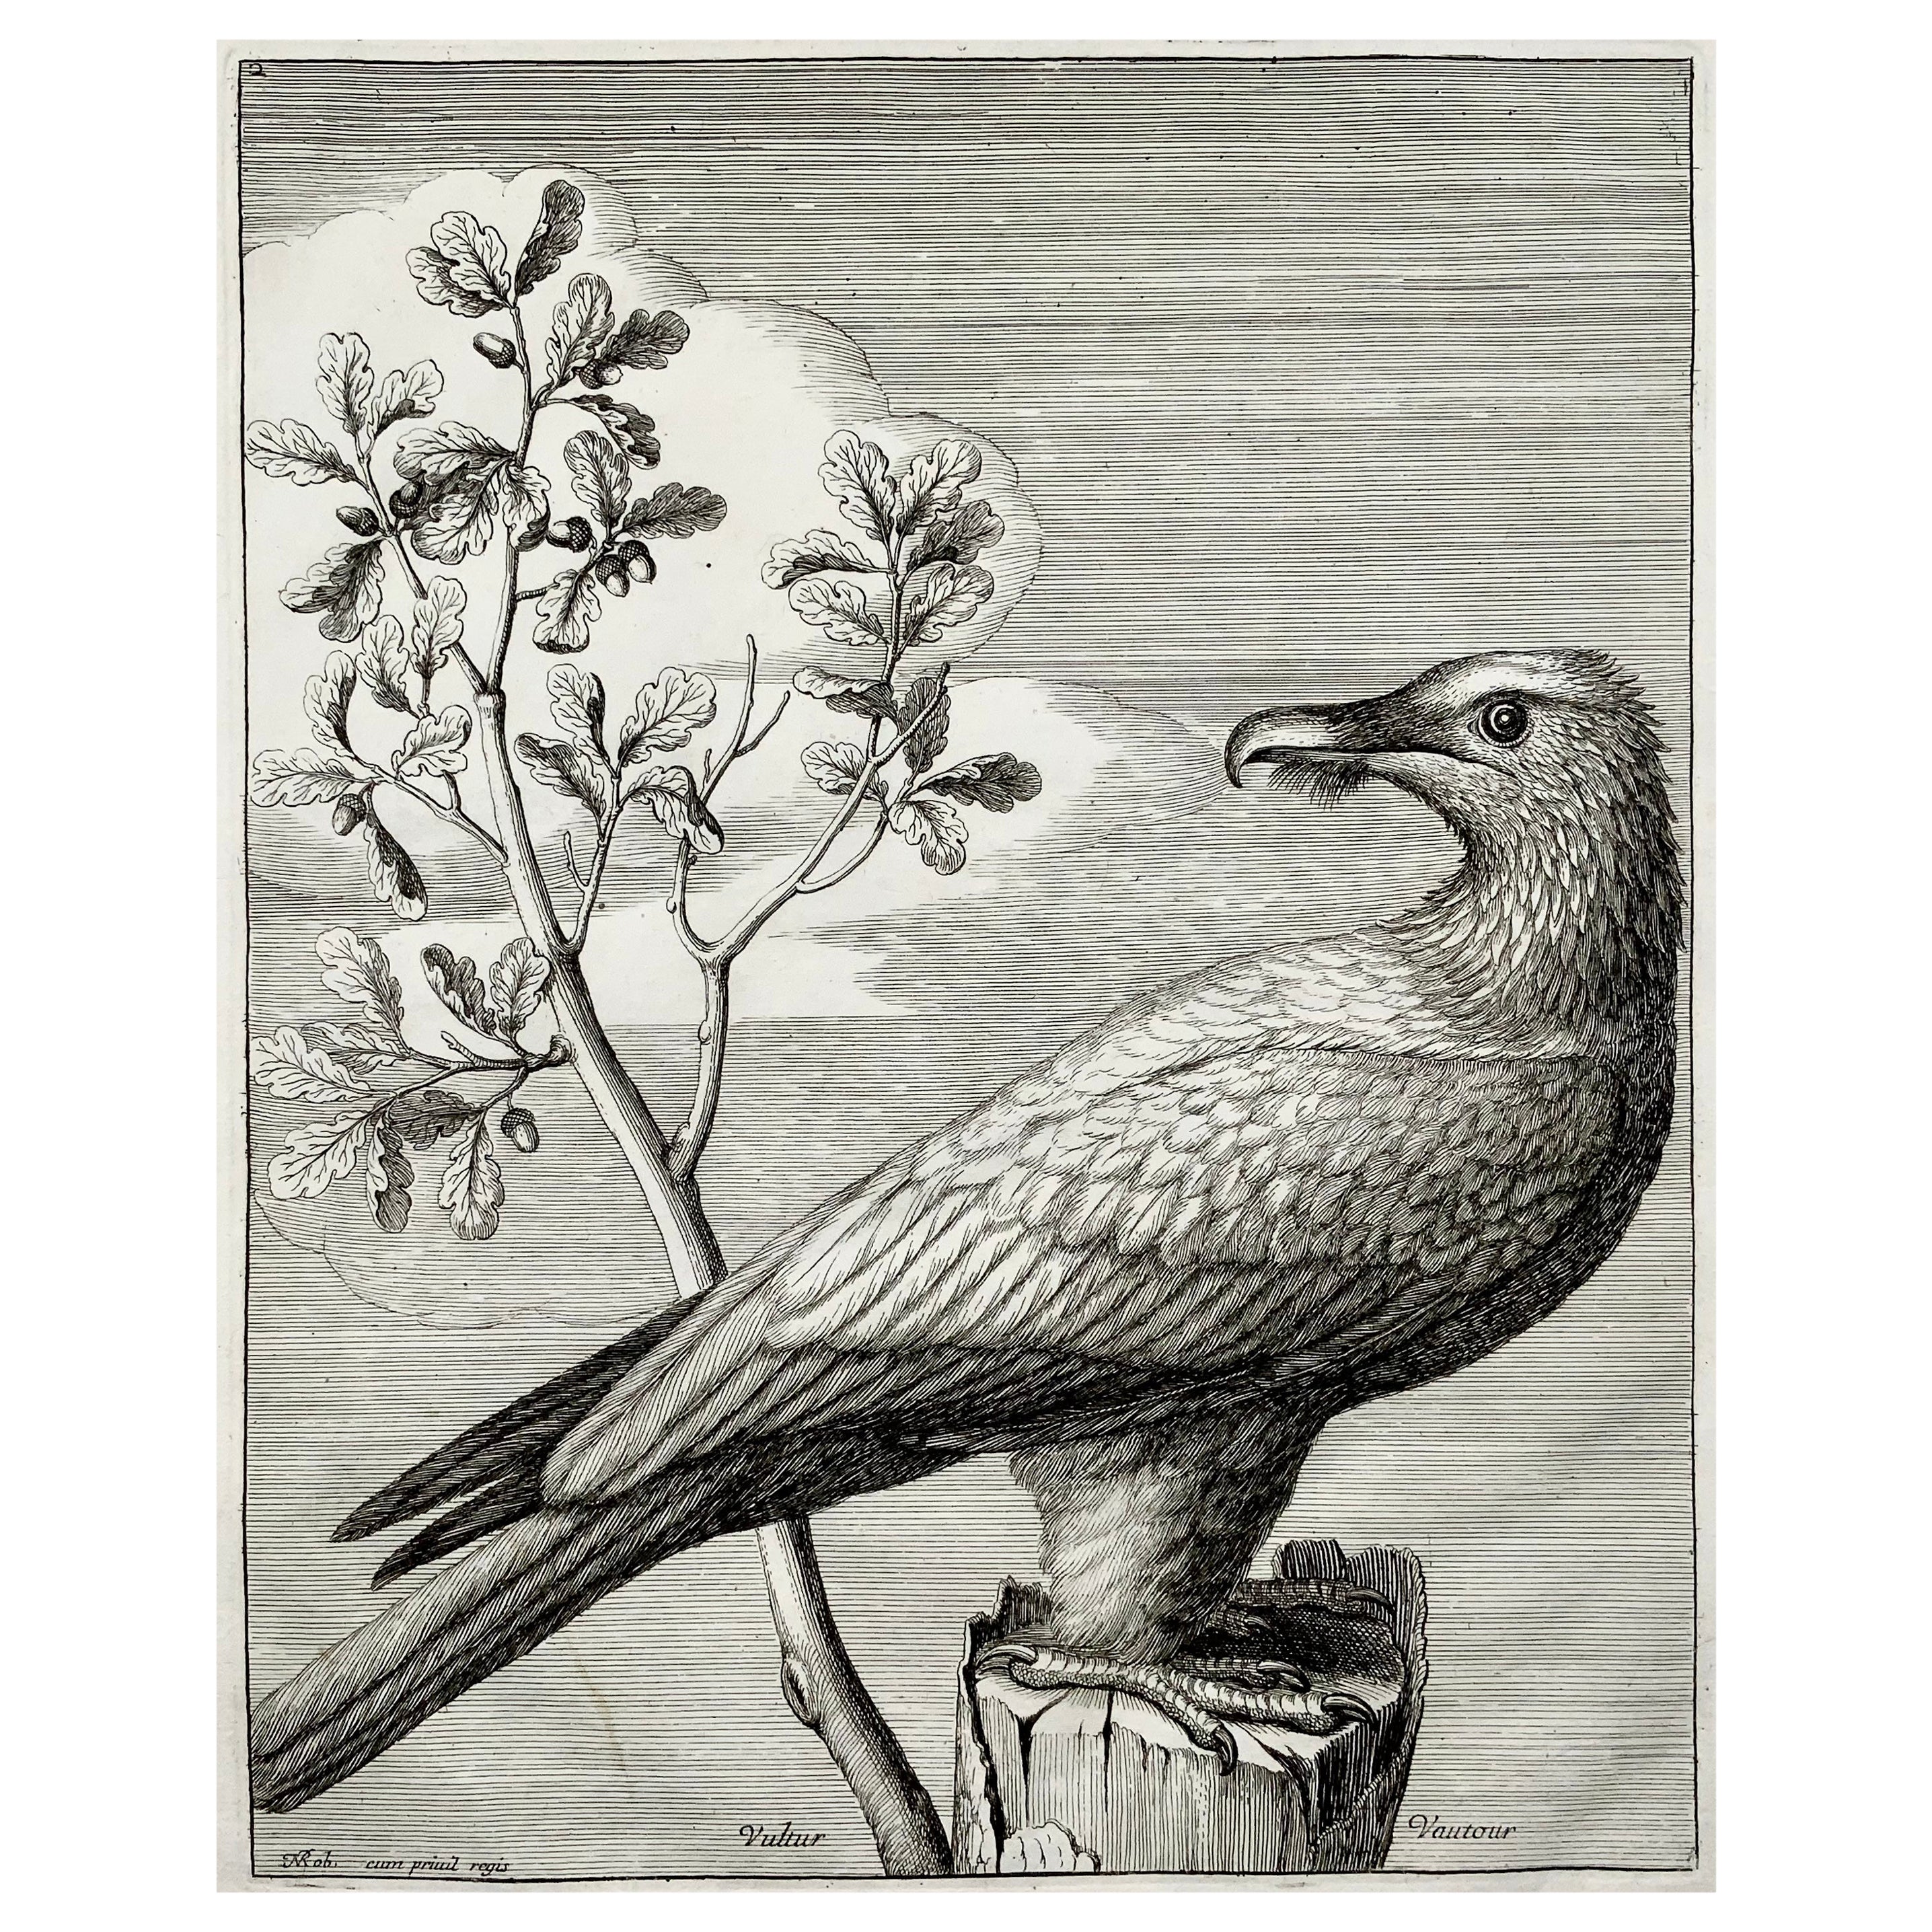 Vulture, Bird of Prey, Nicolas Robert, Folio Etching